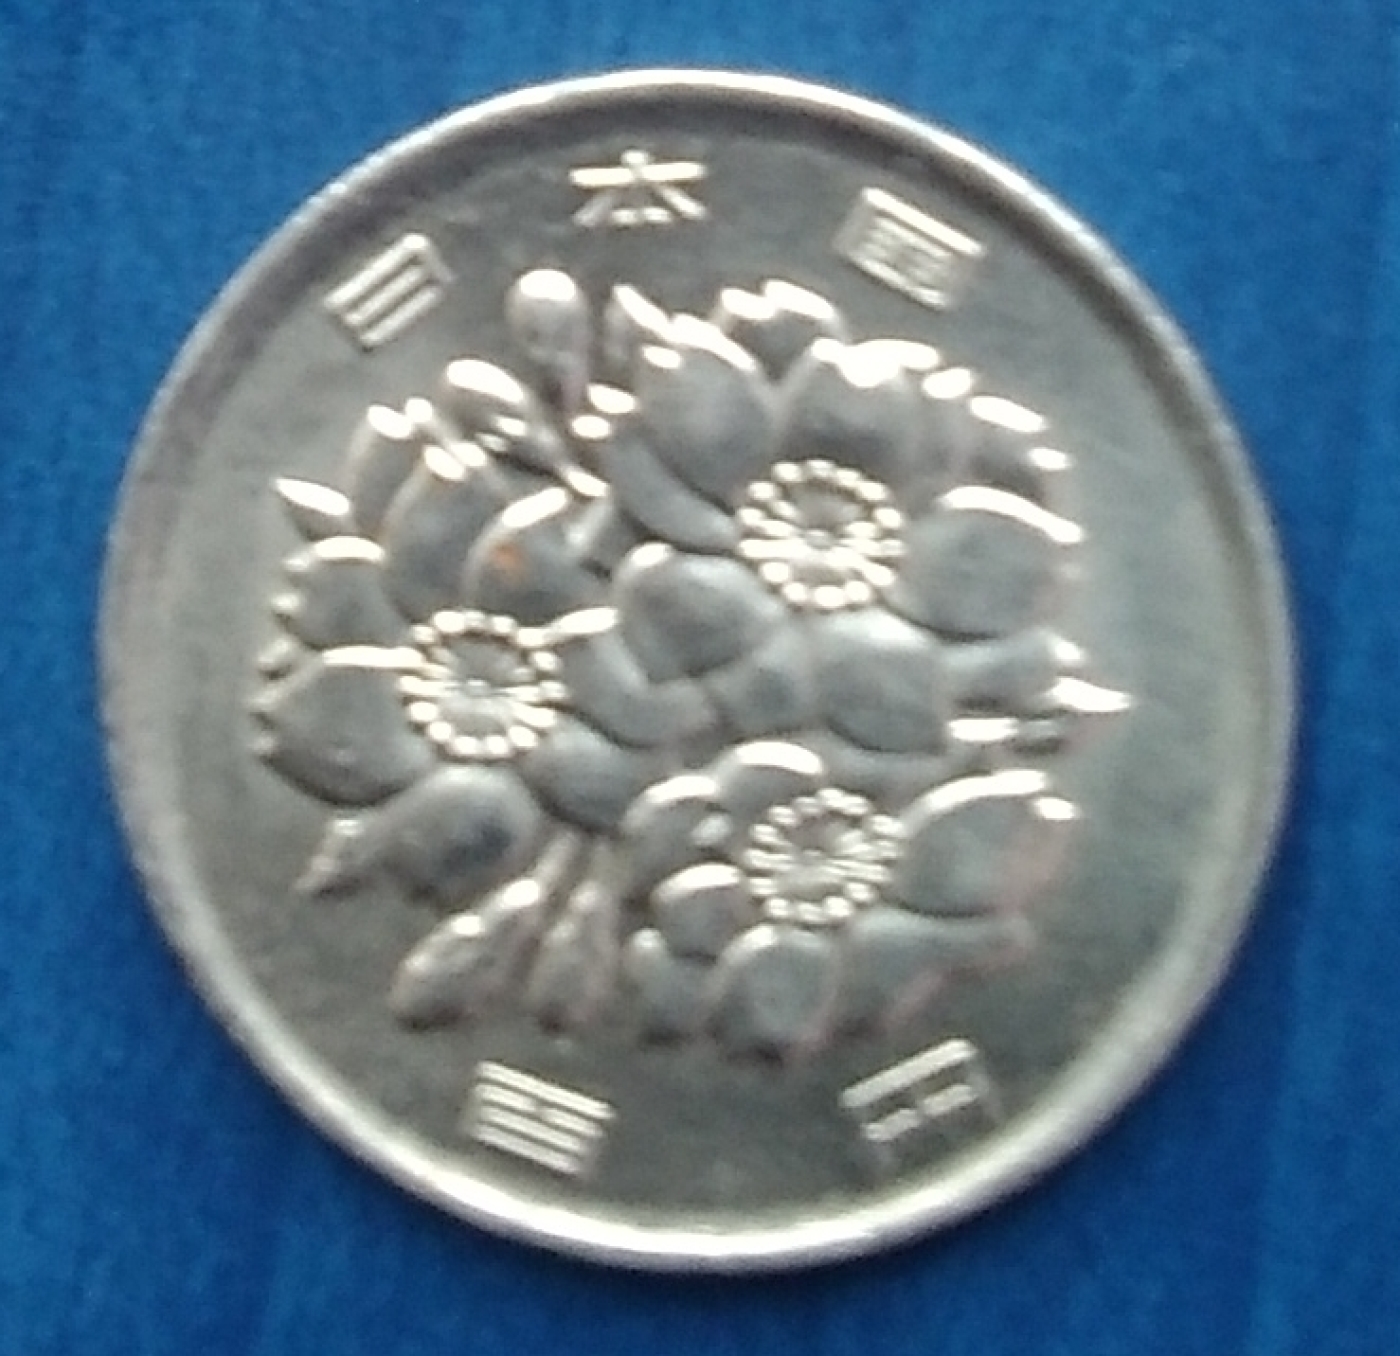 100 Een 2012 (24), Heisei (2000-2019) - Japan - Coin - 44355